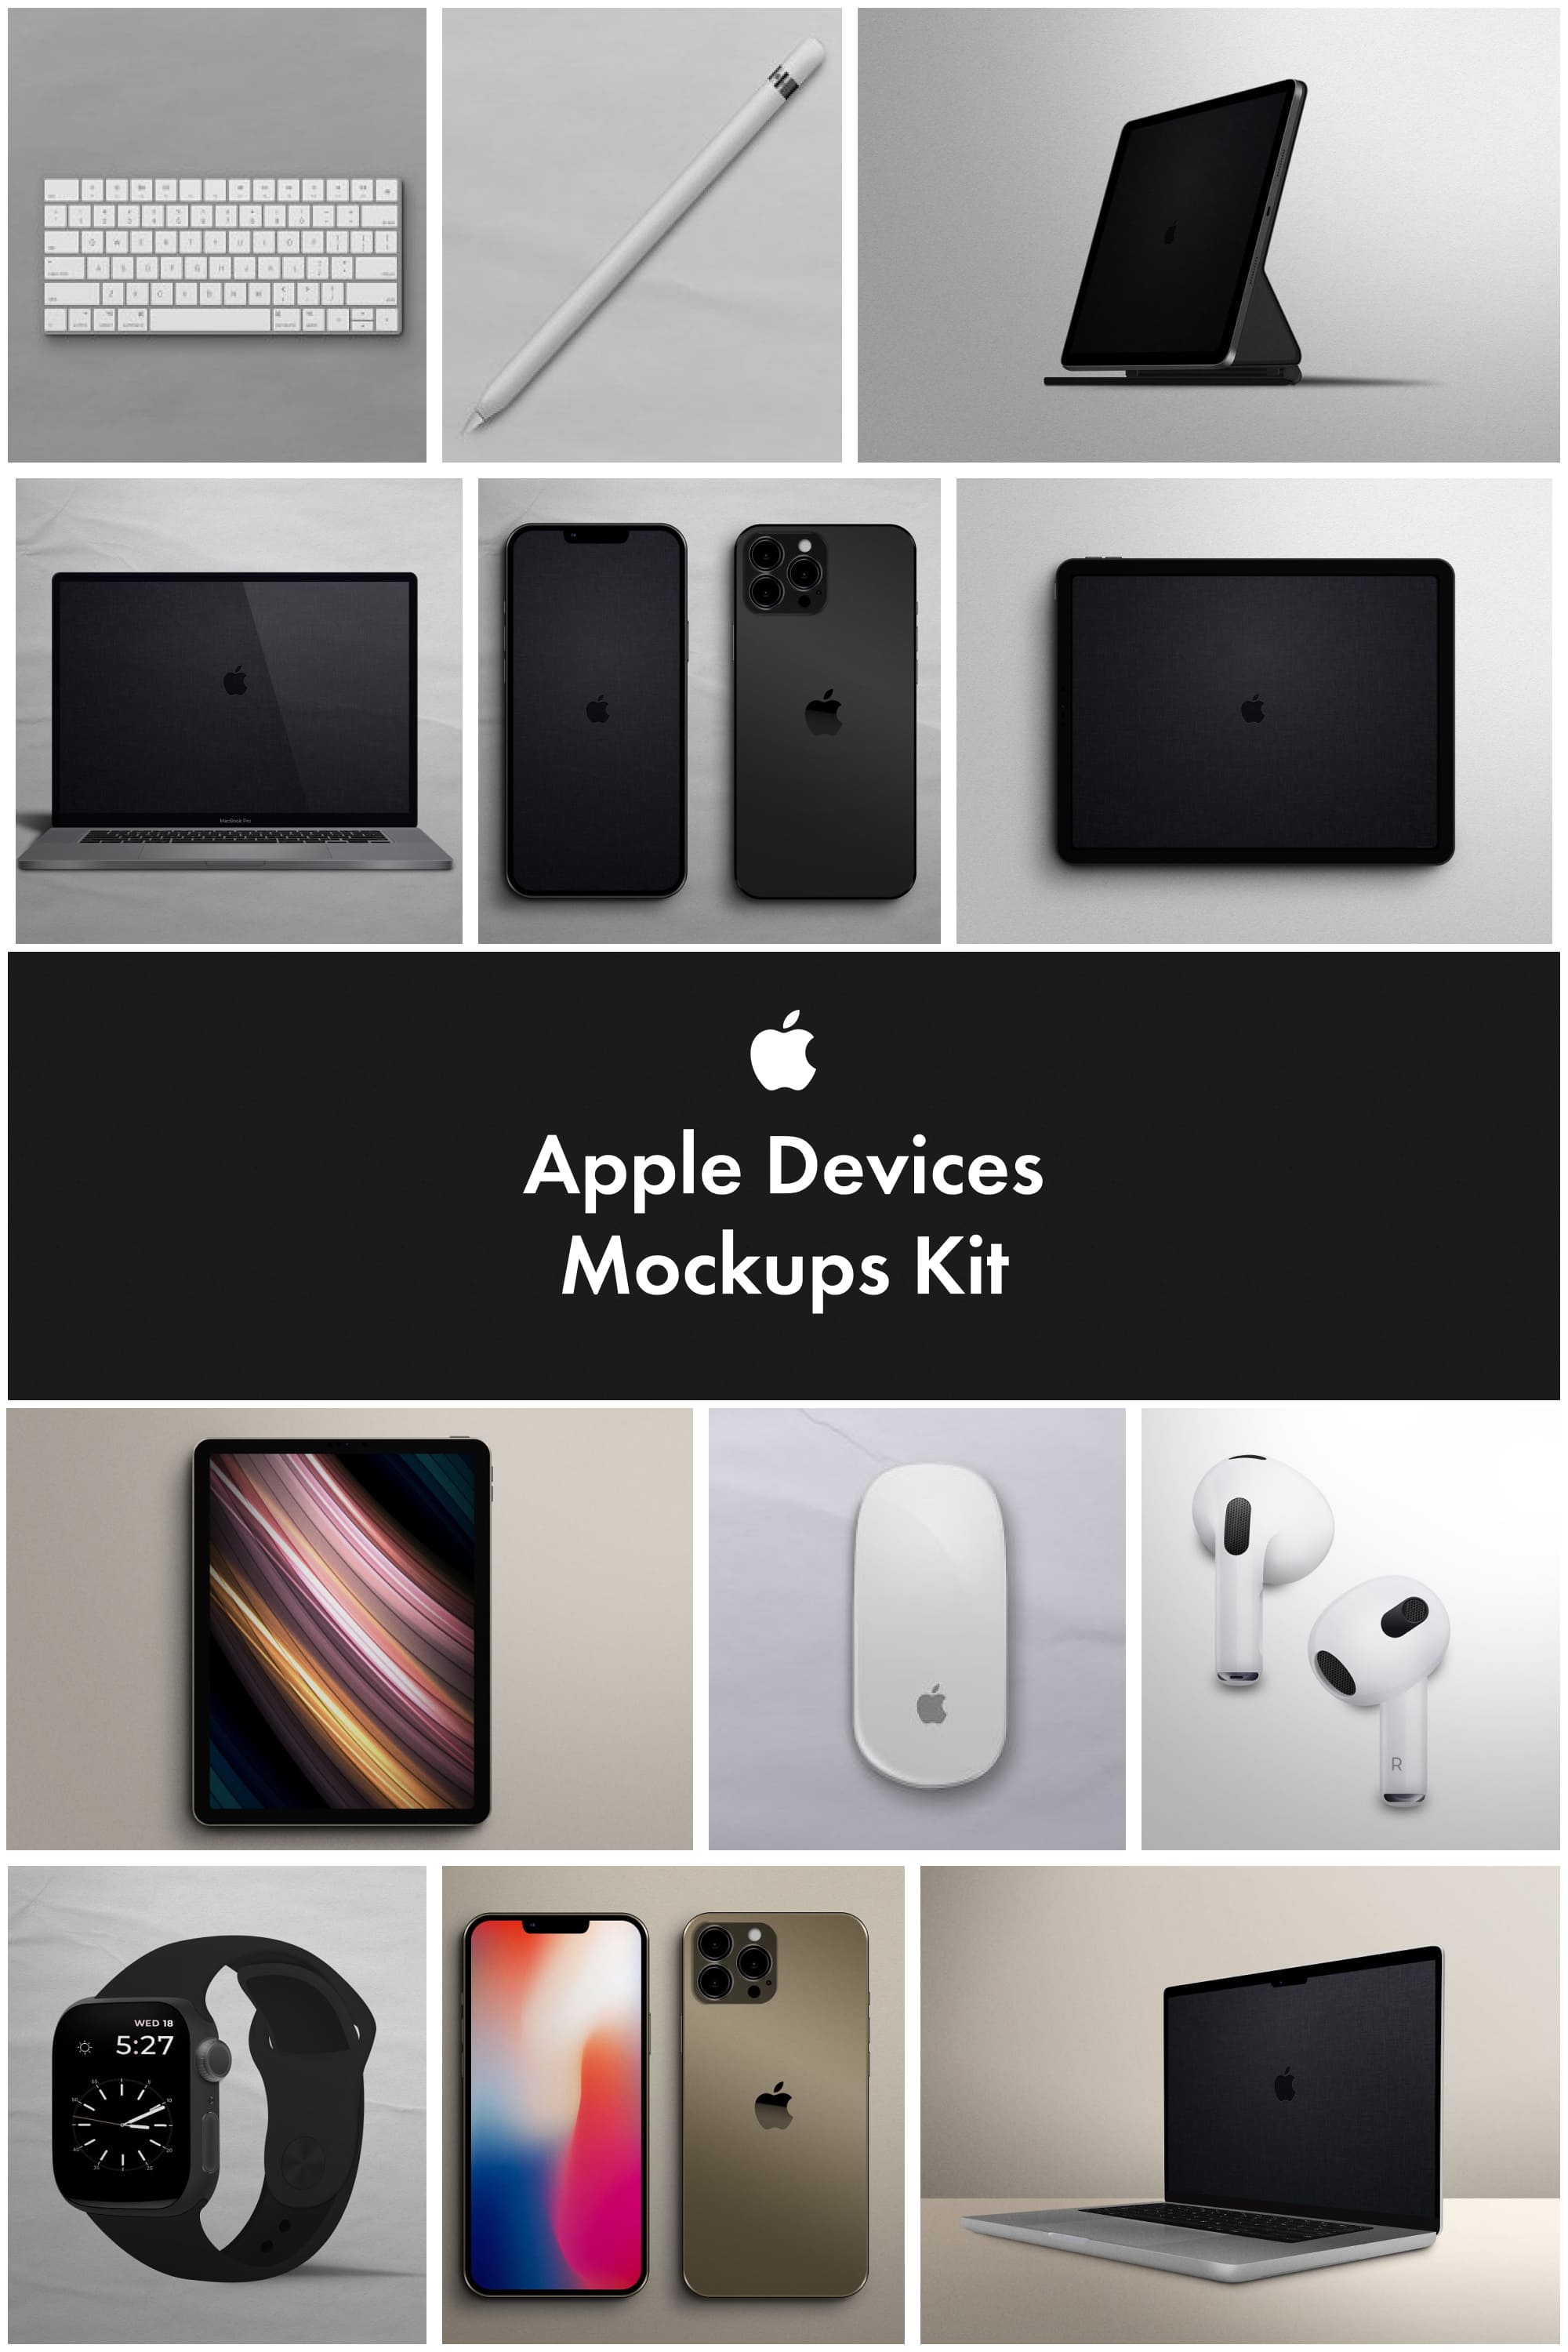 Apple Devices Mockups Kit Pinterest.